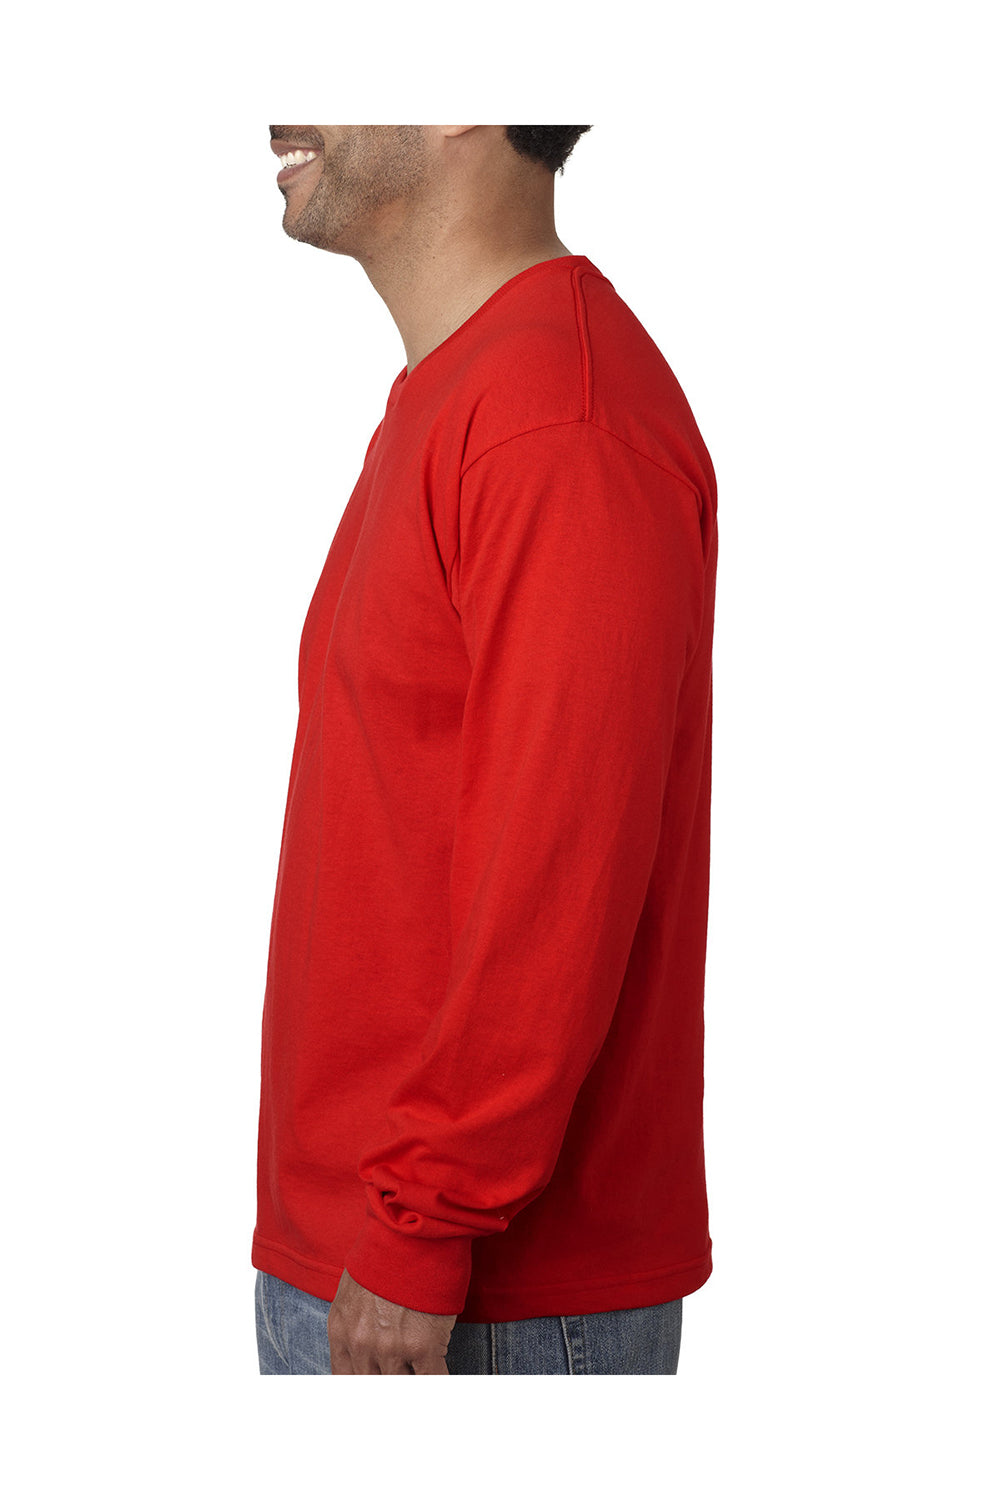 Bayside BA5060 Mens USA Made Long Sleeve Crewneck T-Shirt Red Model Side